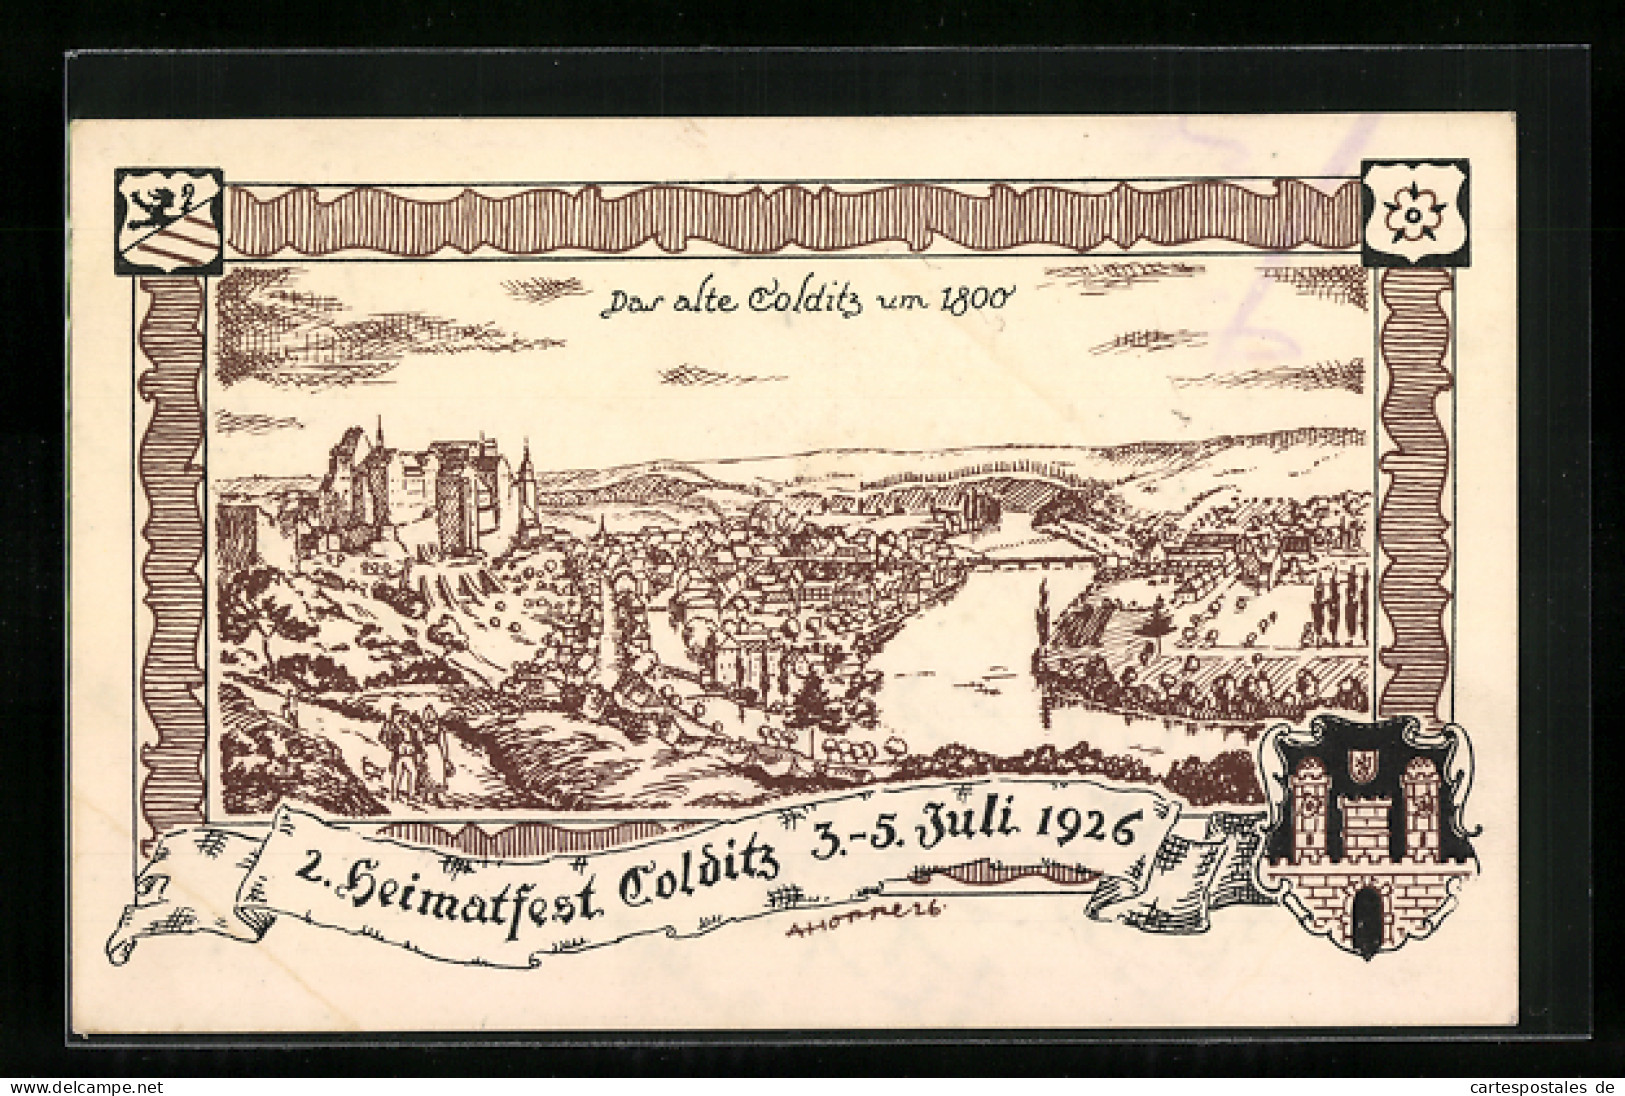 Künstler-AK Colditz, Das Alte Colditz Um 1800, 2. Heimatfest 3.-5. Juli 1926, Wappen  - Colditz